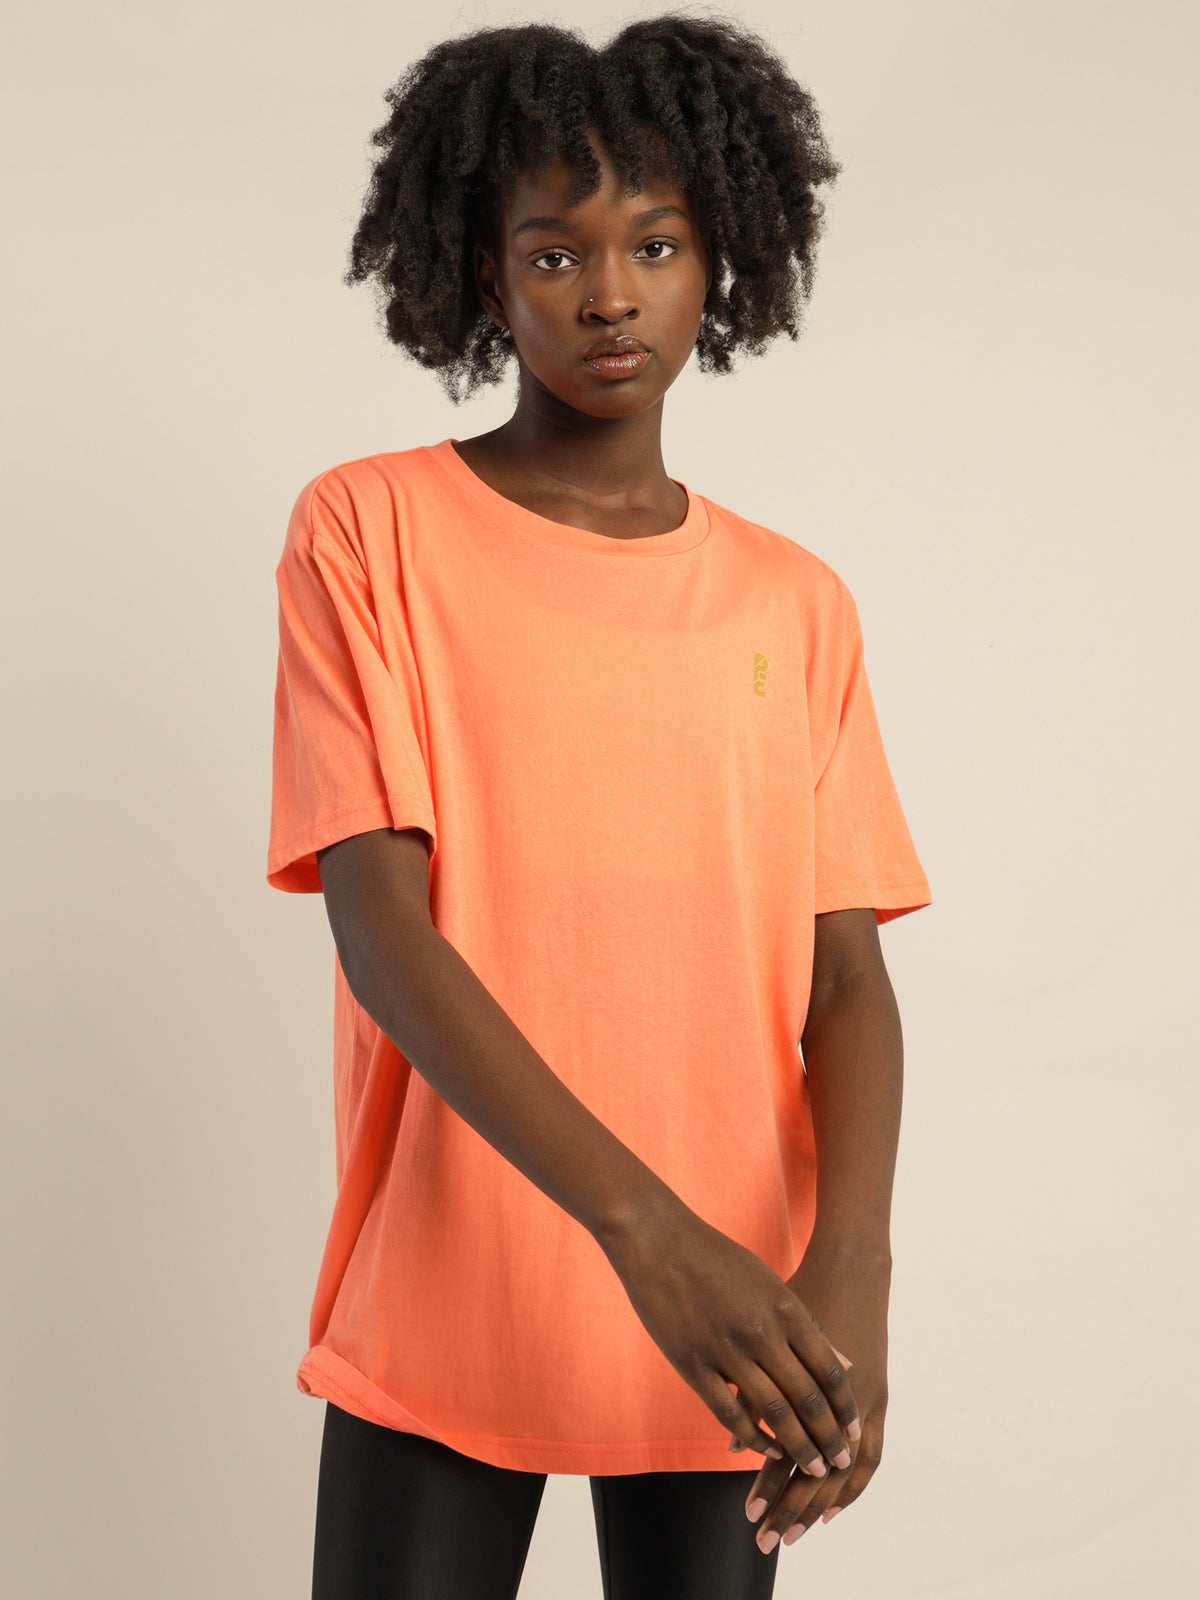 All Around T-Shirt in Persimmon Orange